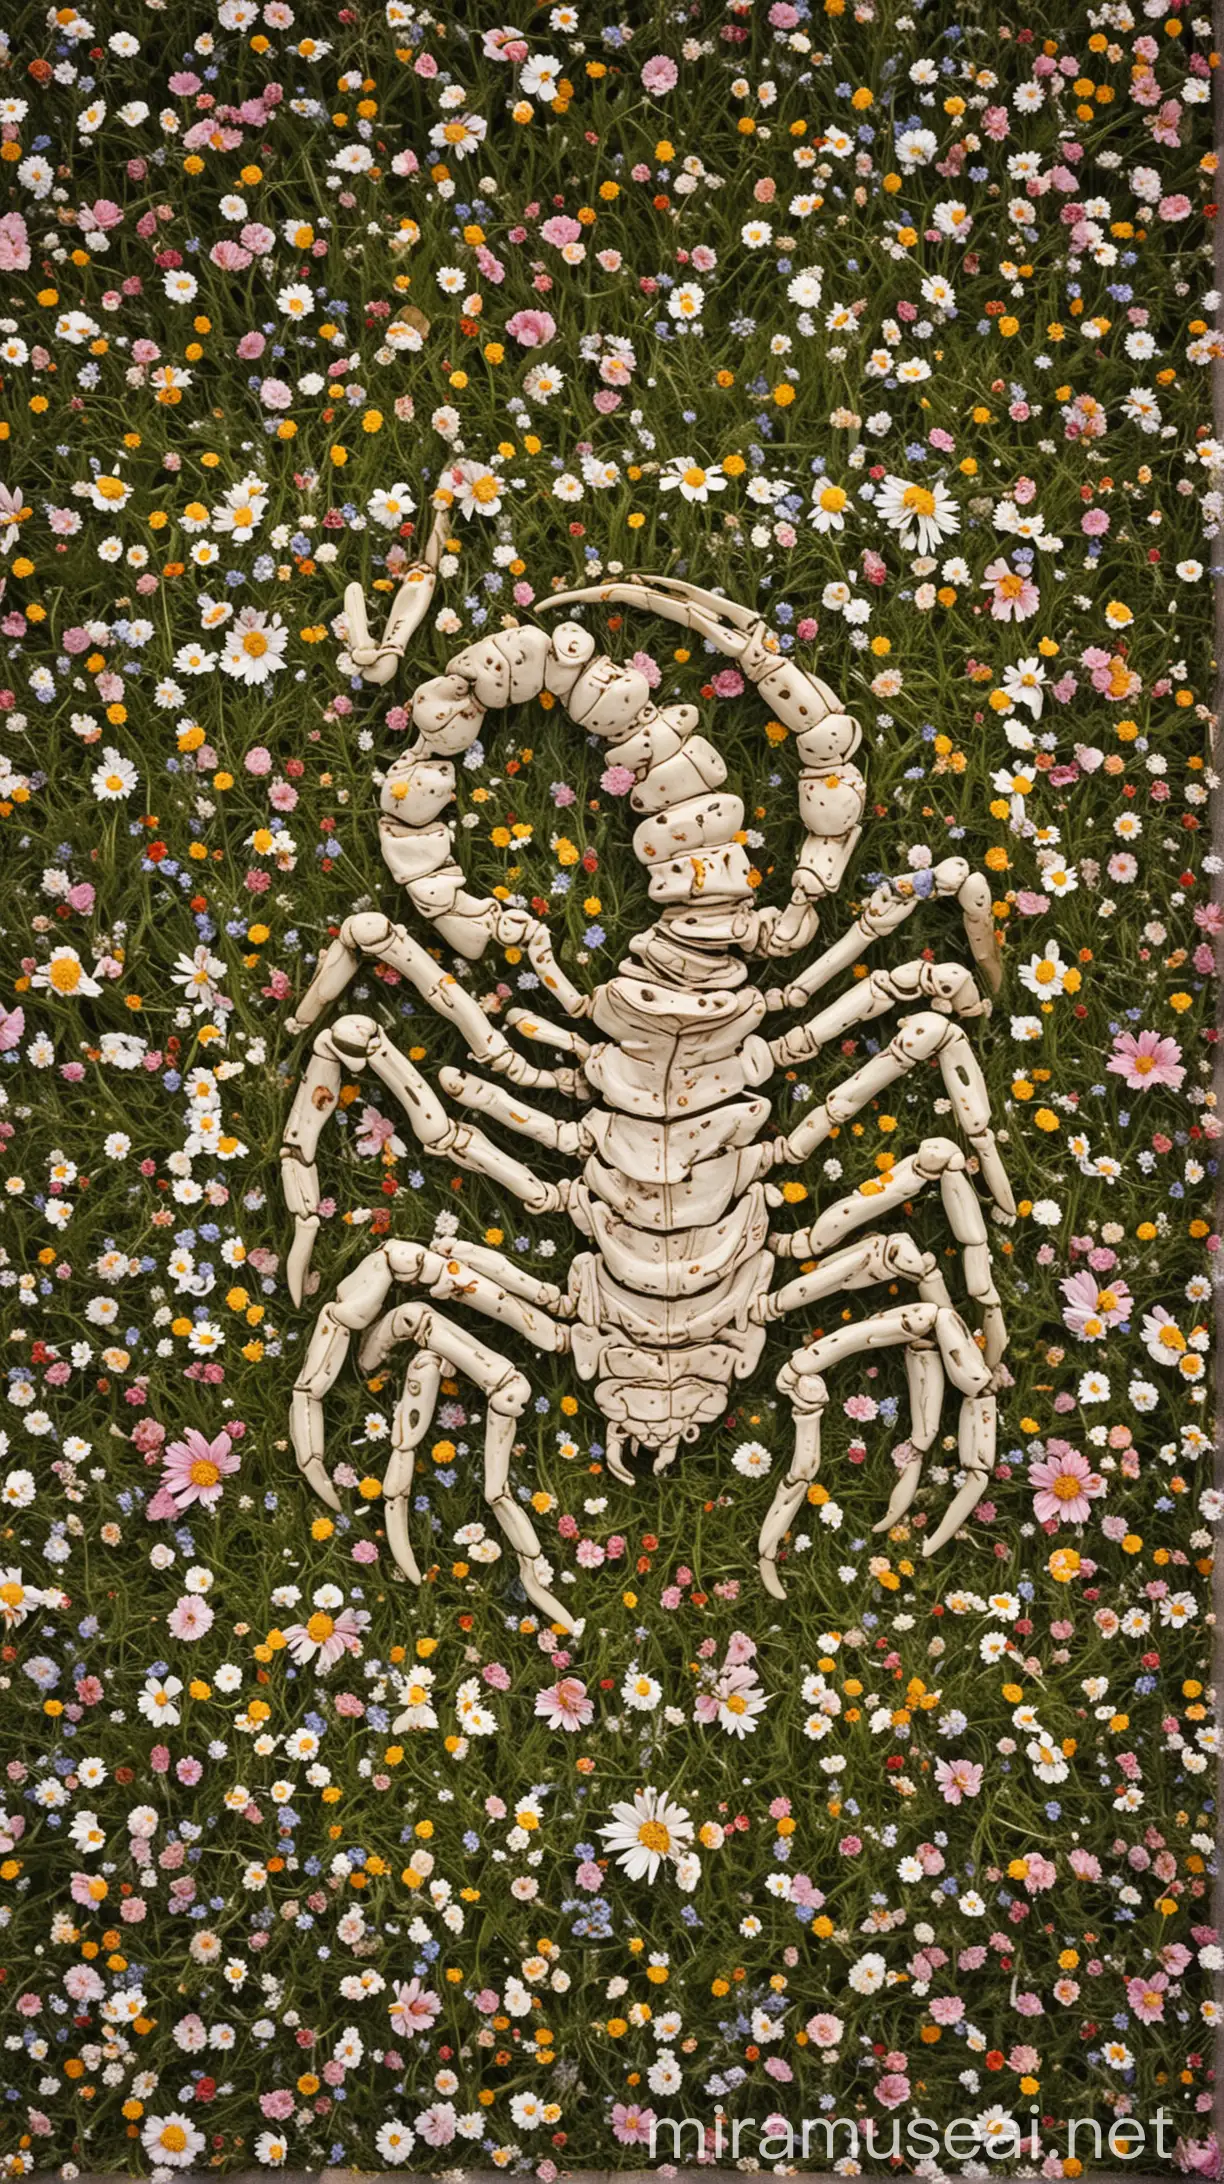 Zodiac sign scorpio in a field of delicate flowers